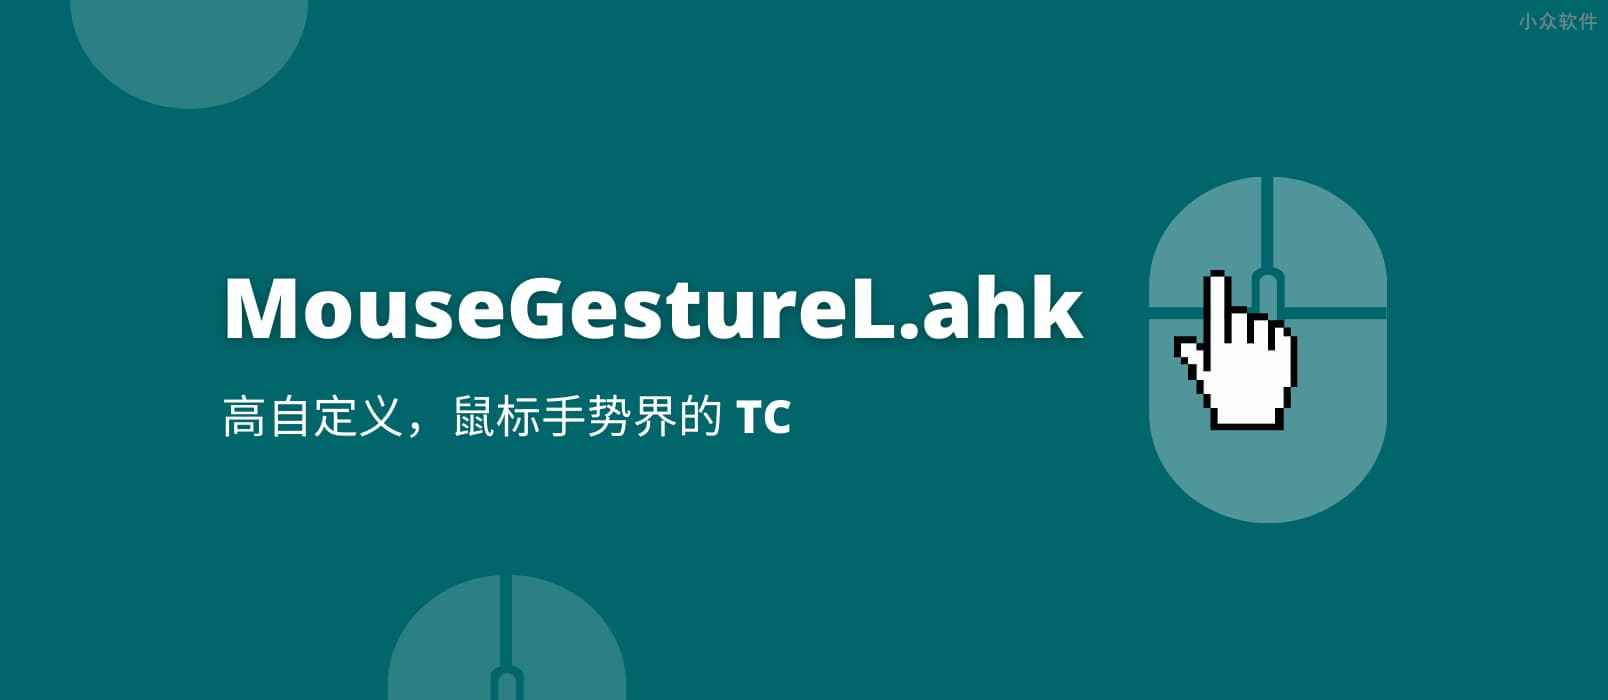 MouseGestureL.ahk - 高自定义，堪称鼠标手势界的 TC[Windows]